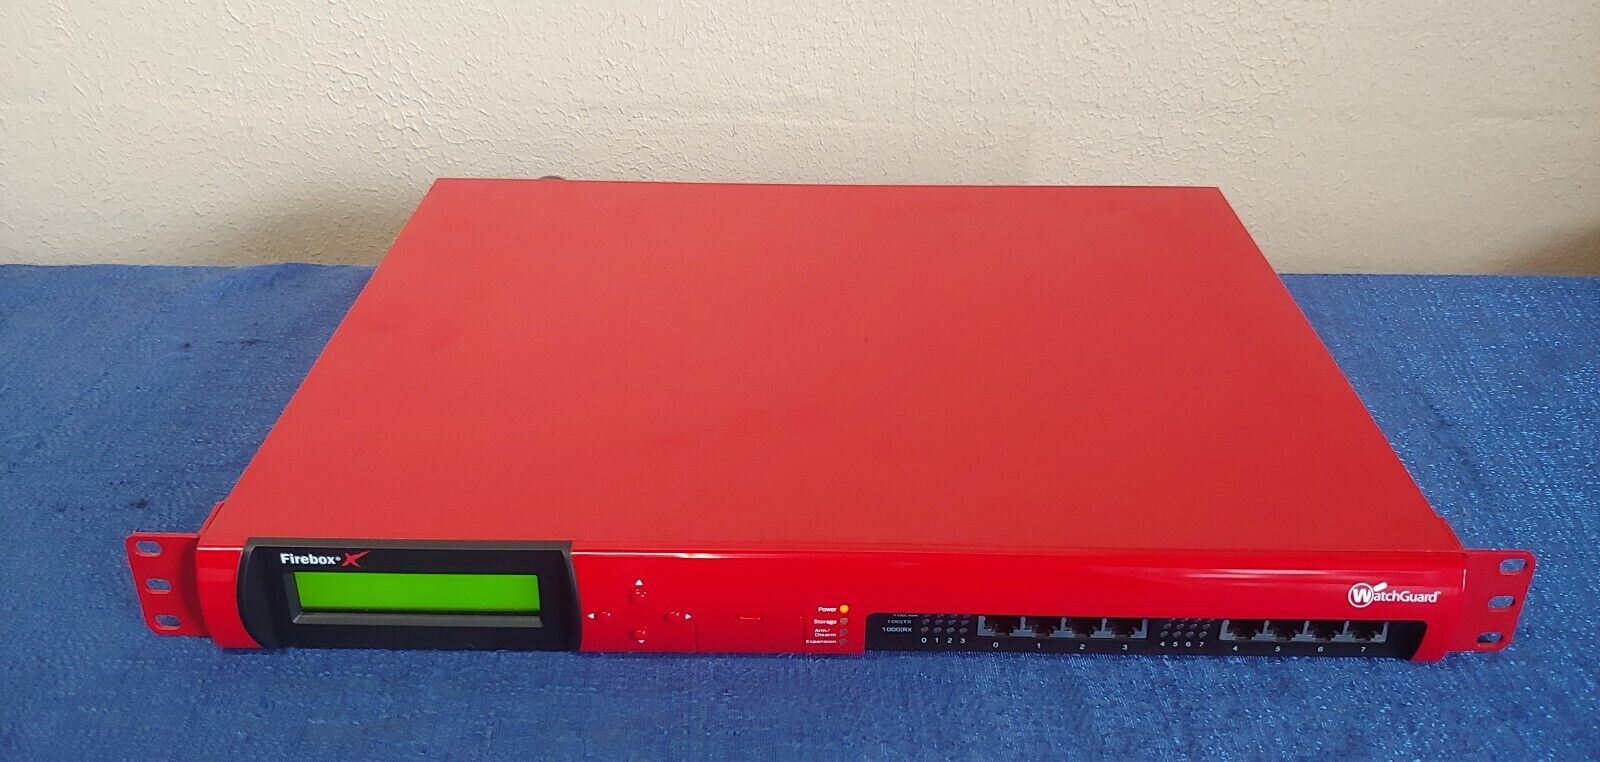 Watchguard Firebox X1250e Core Firewall Network Security Appliance (T1AE8)